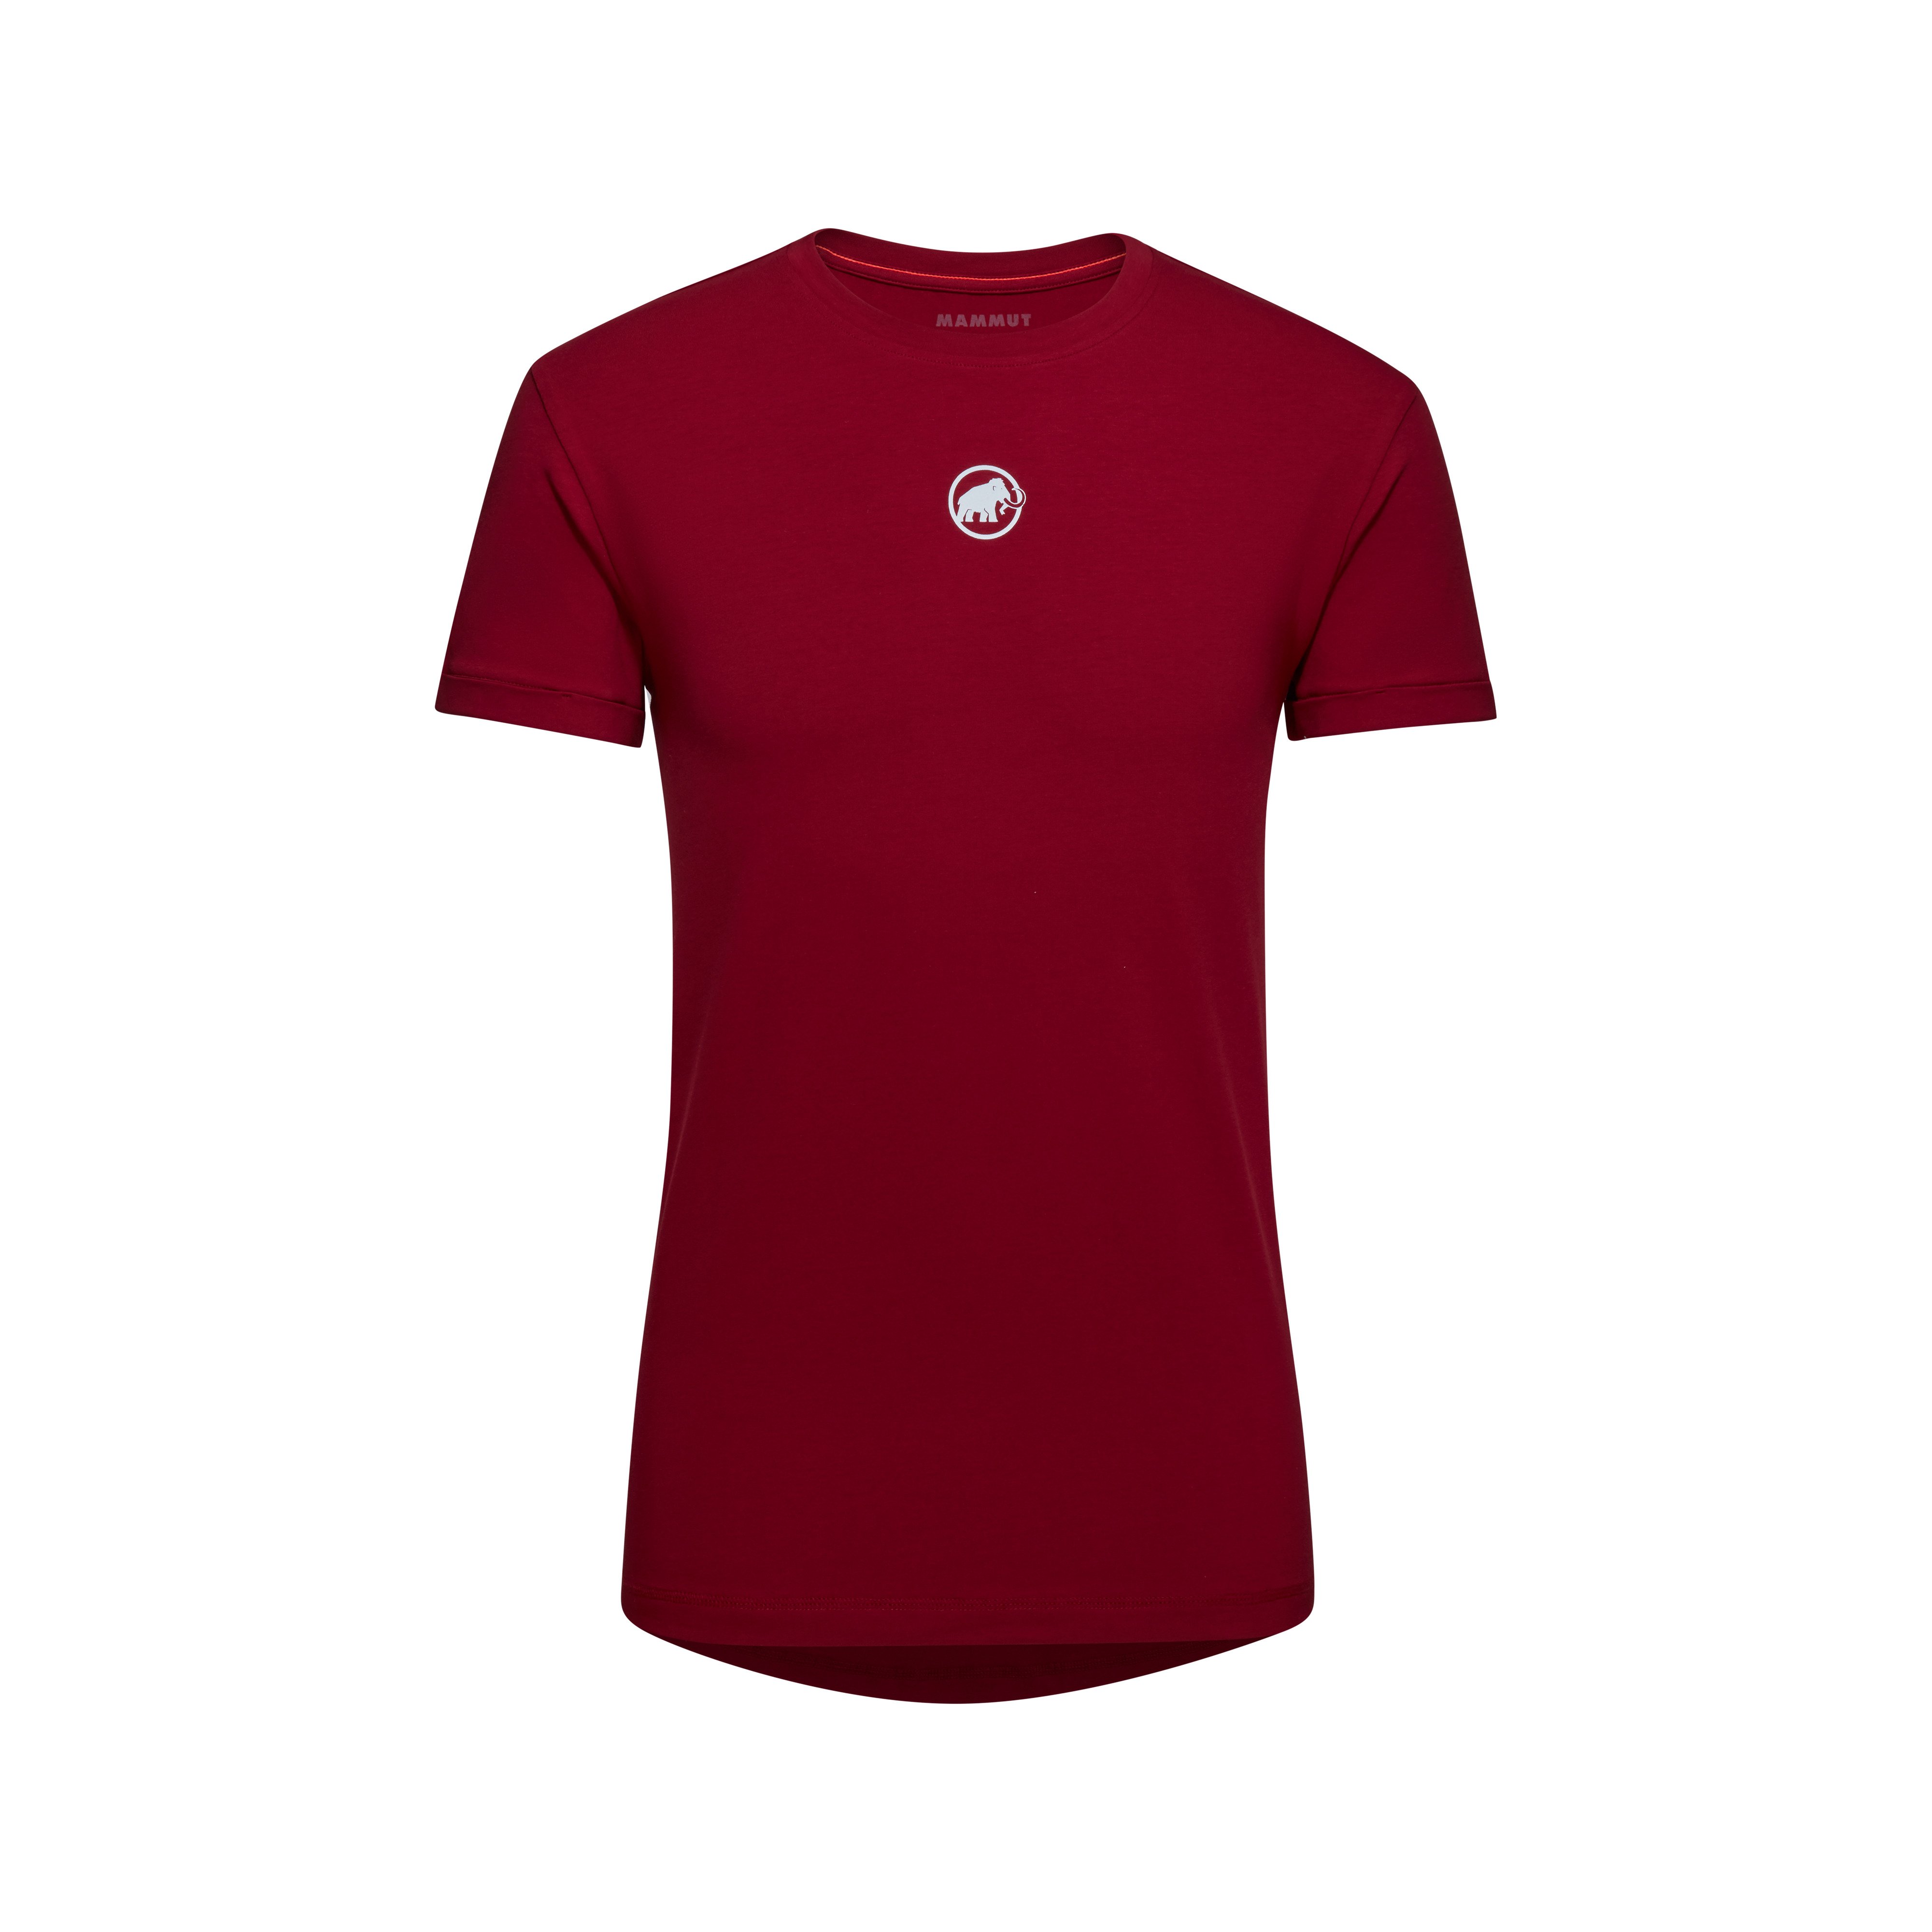 Mammut Seon T-Shirt Men Original - blood red, XL product image